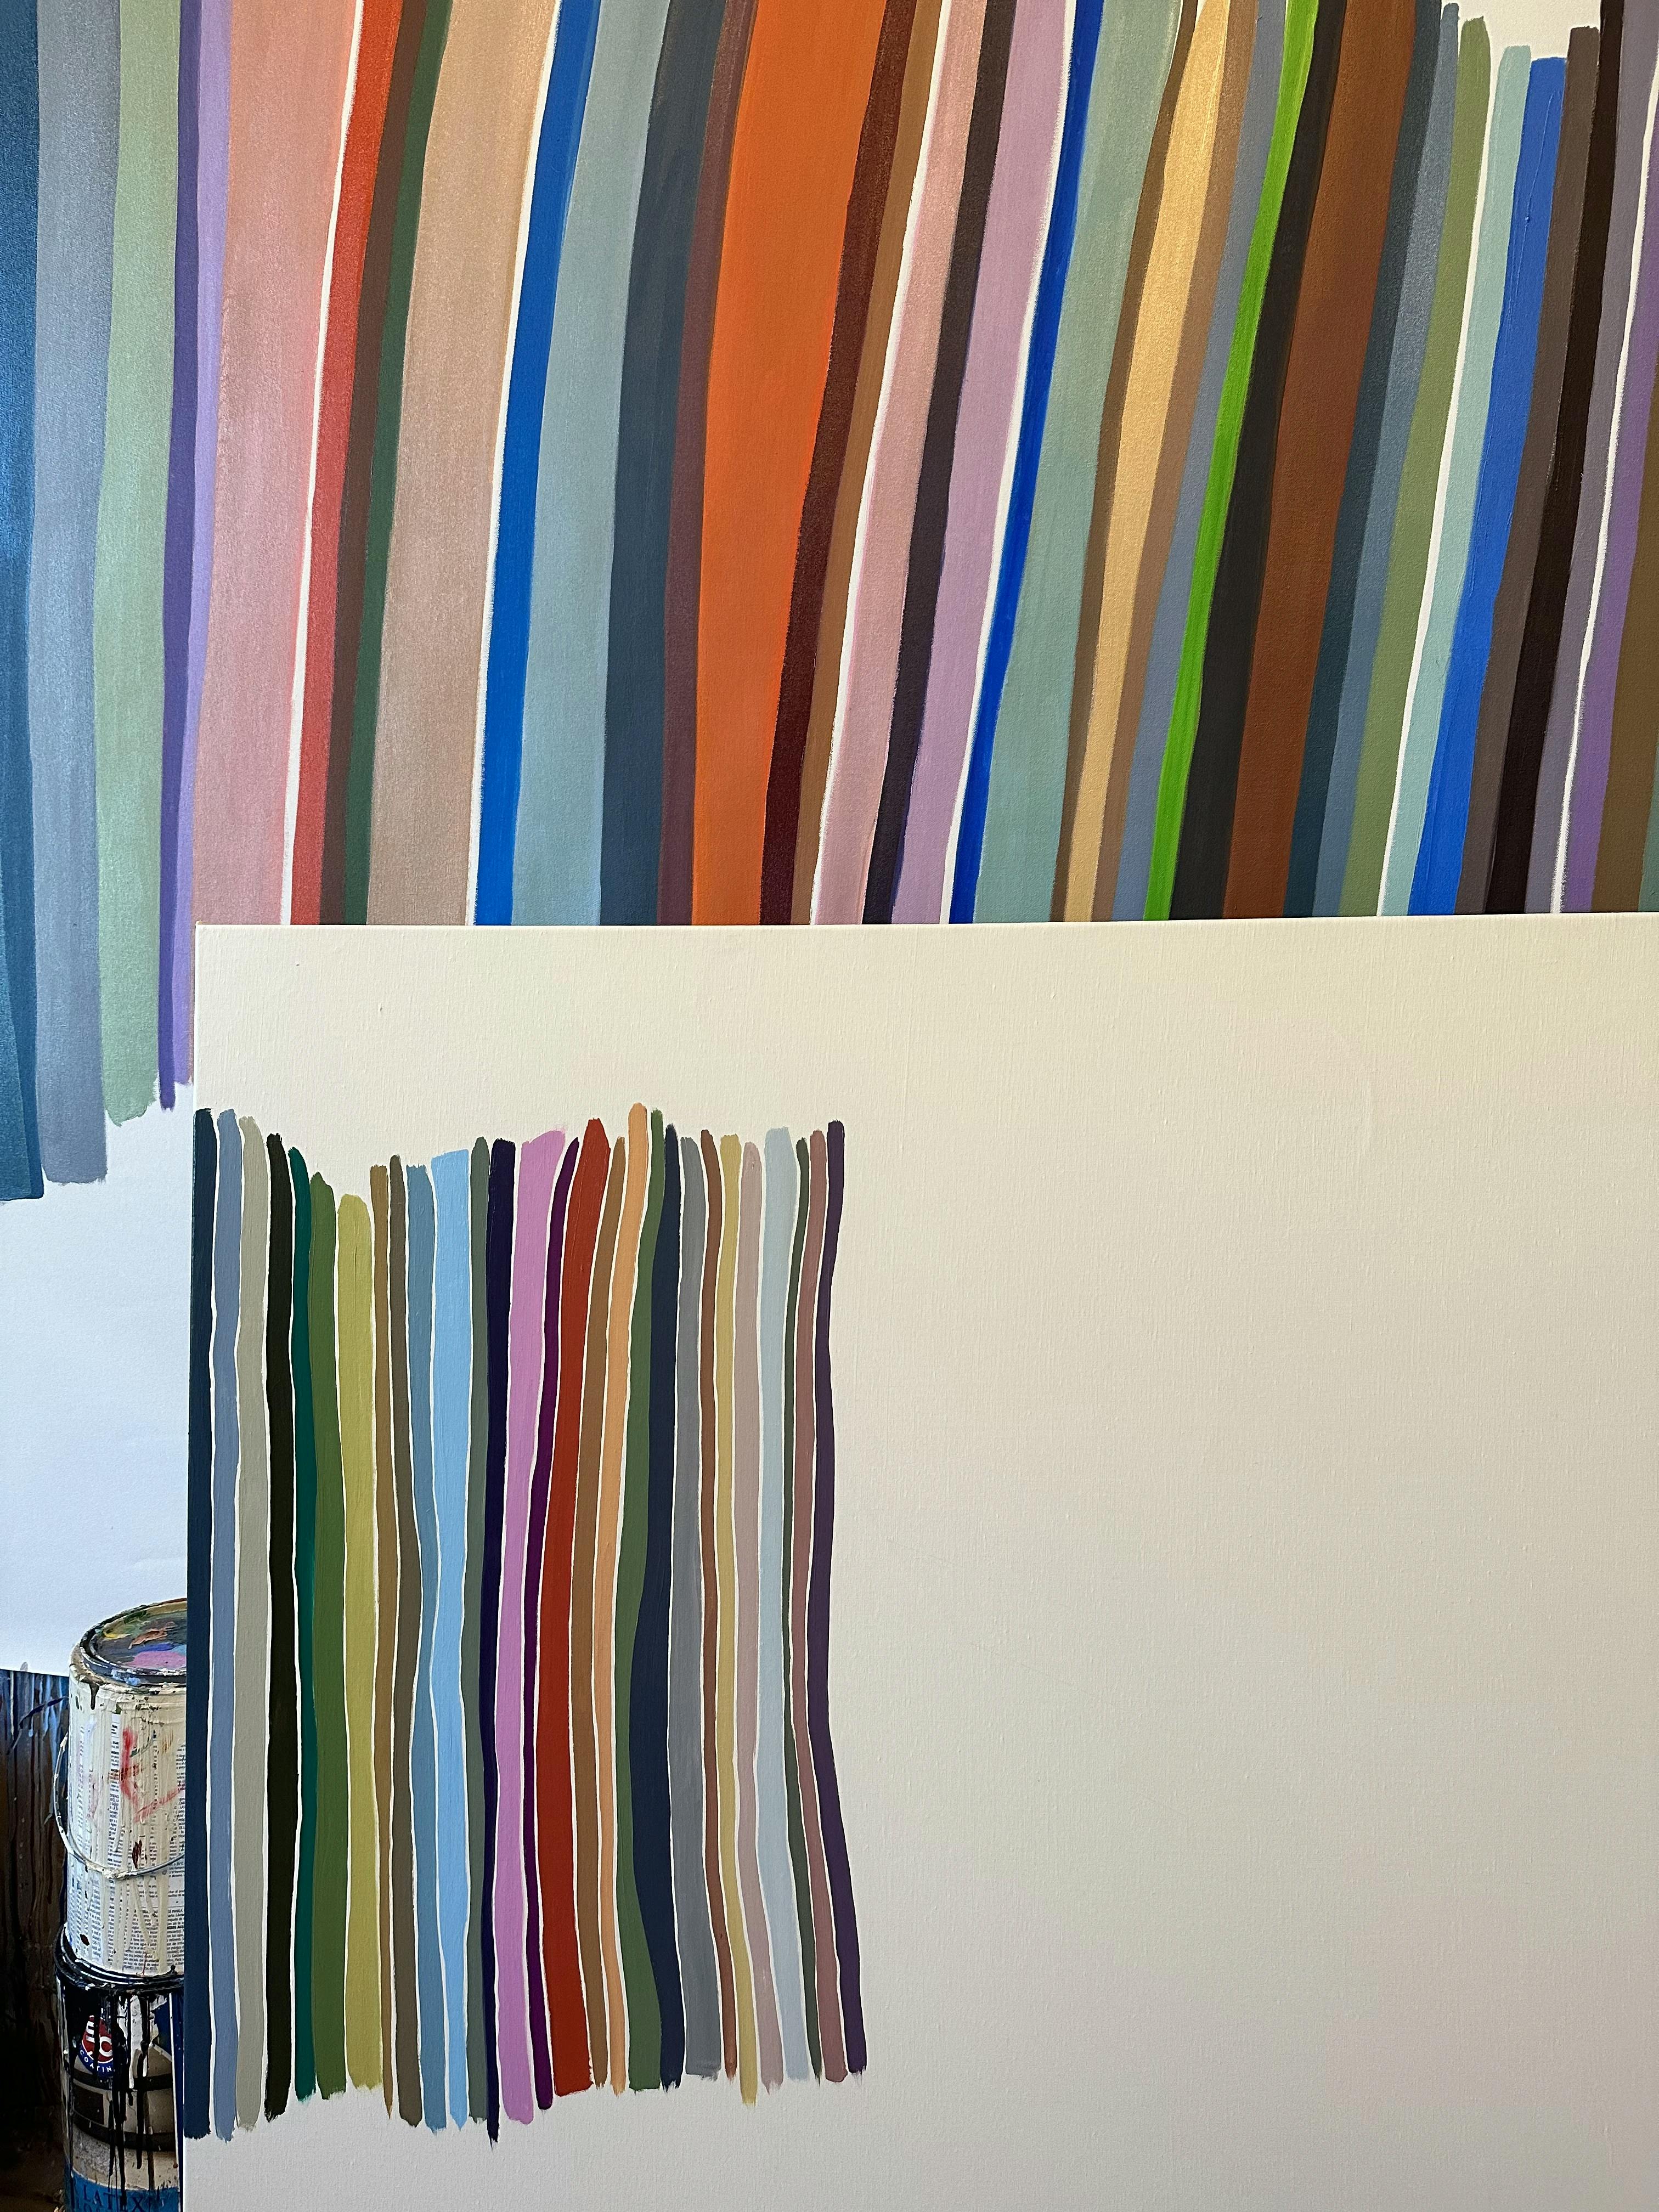 Two in-progress multicolored paintings by John Platt in his studio. 